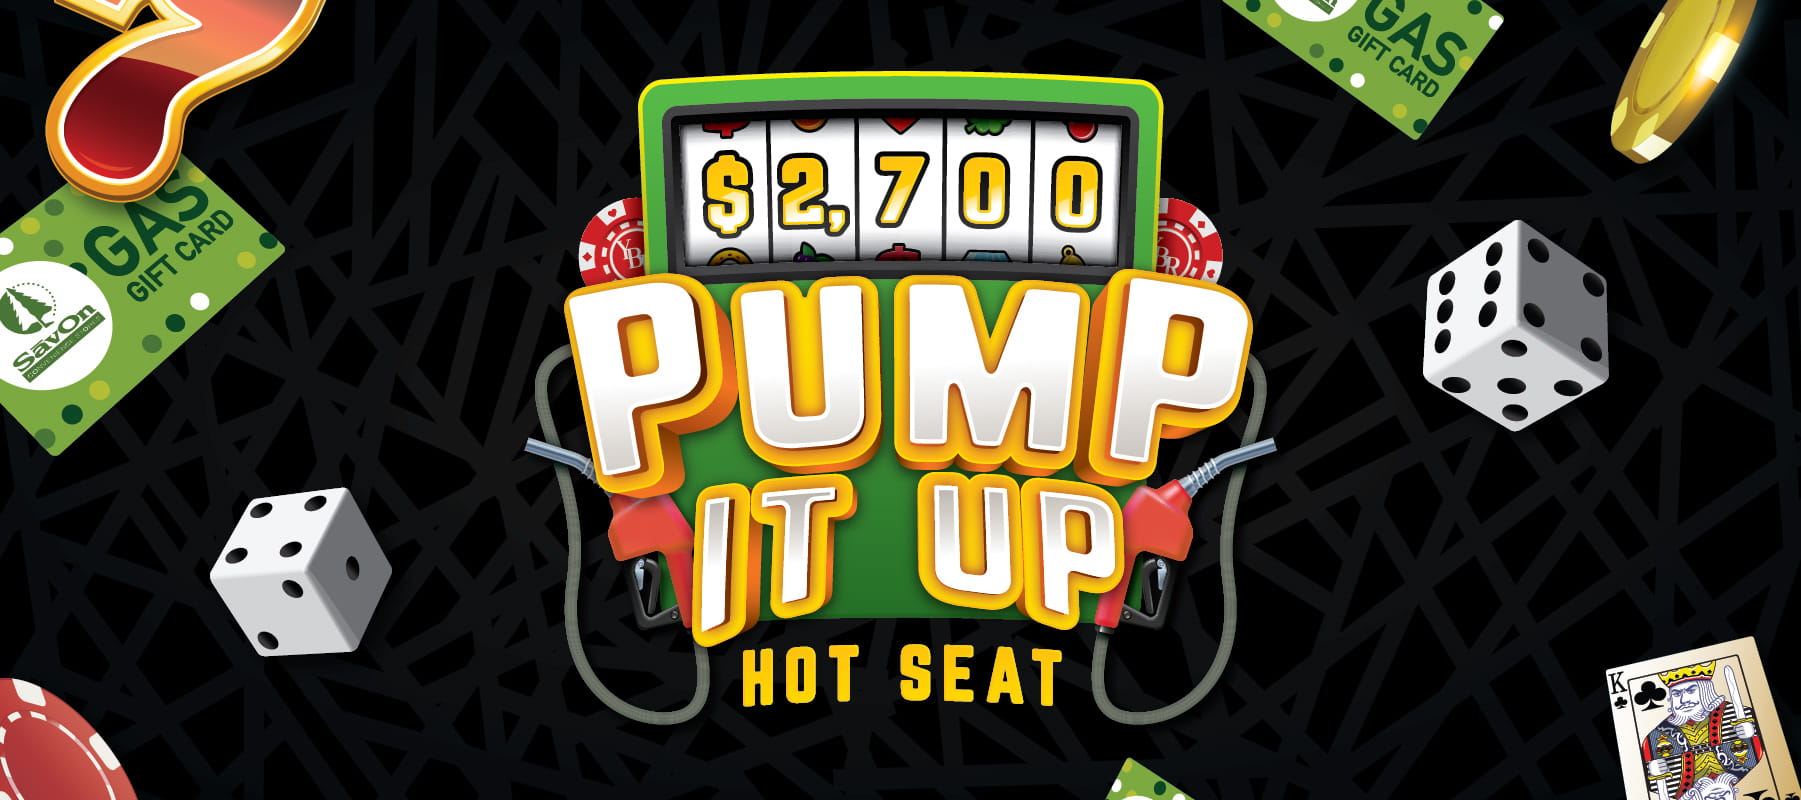 $2,700 Pump It Up Hot Seat